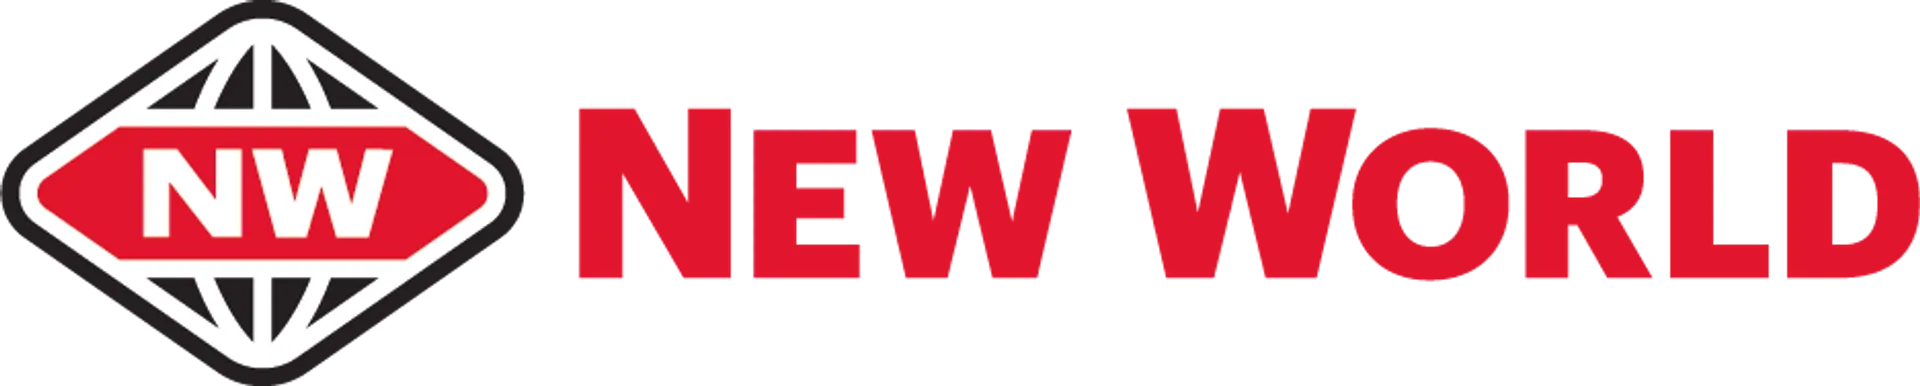 NEW WORLD logo